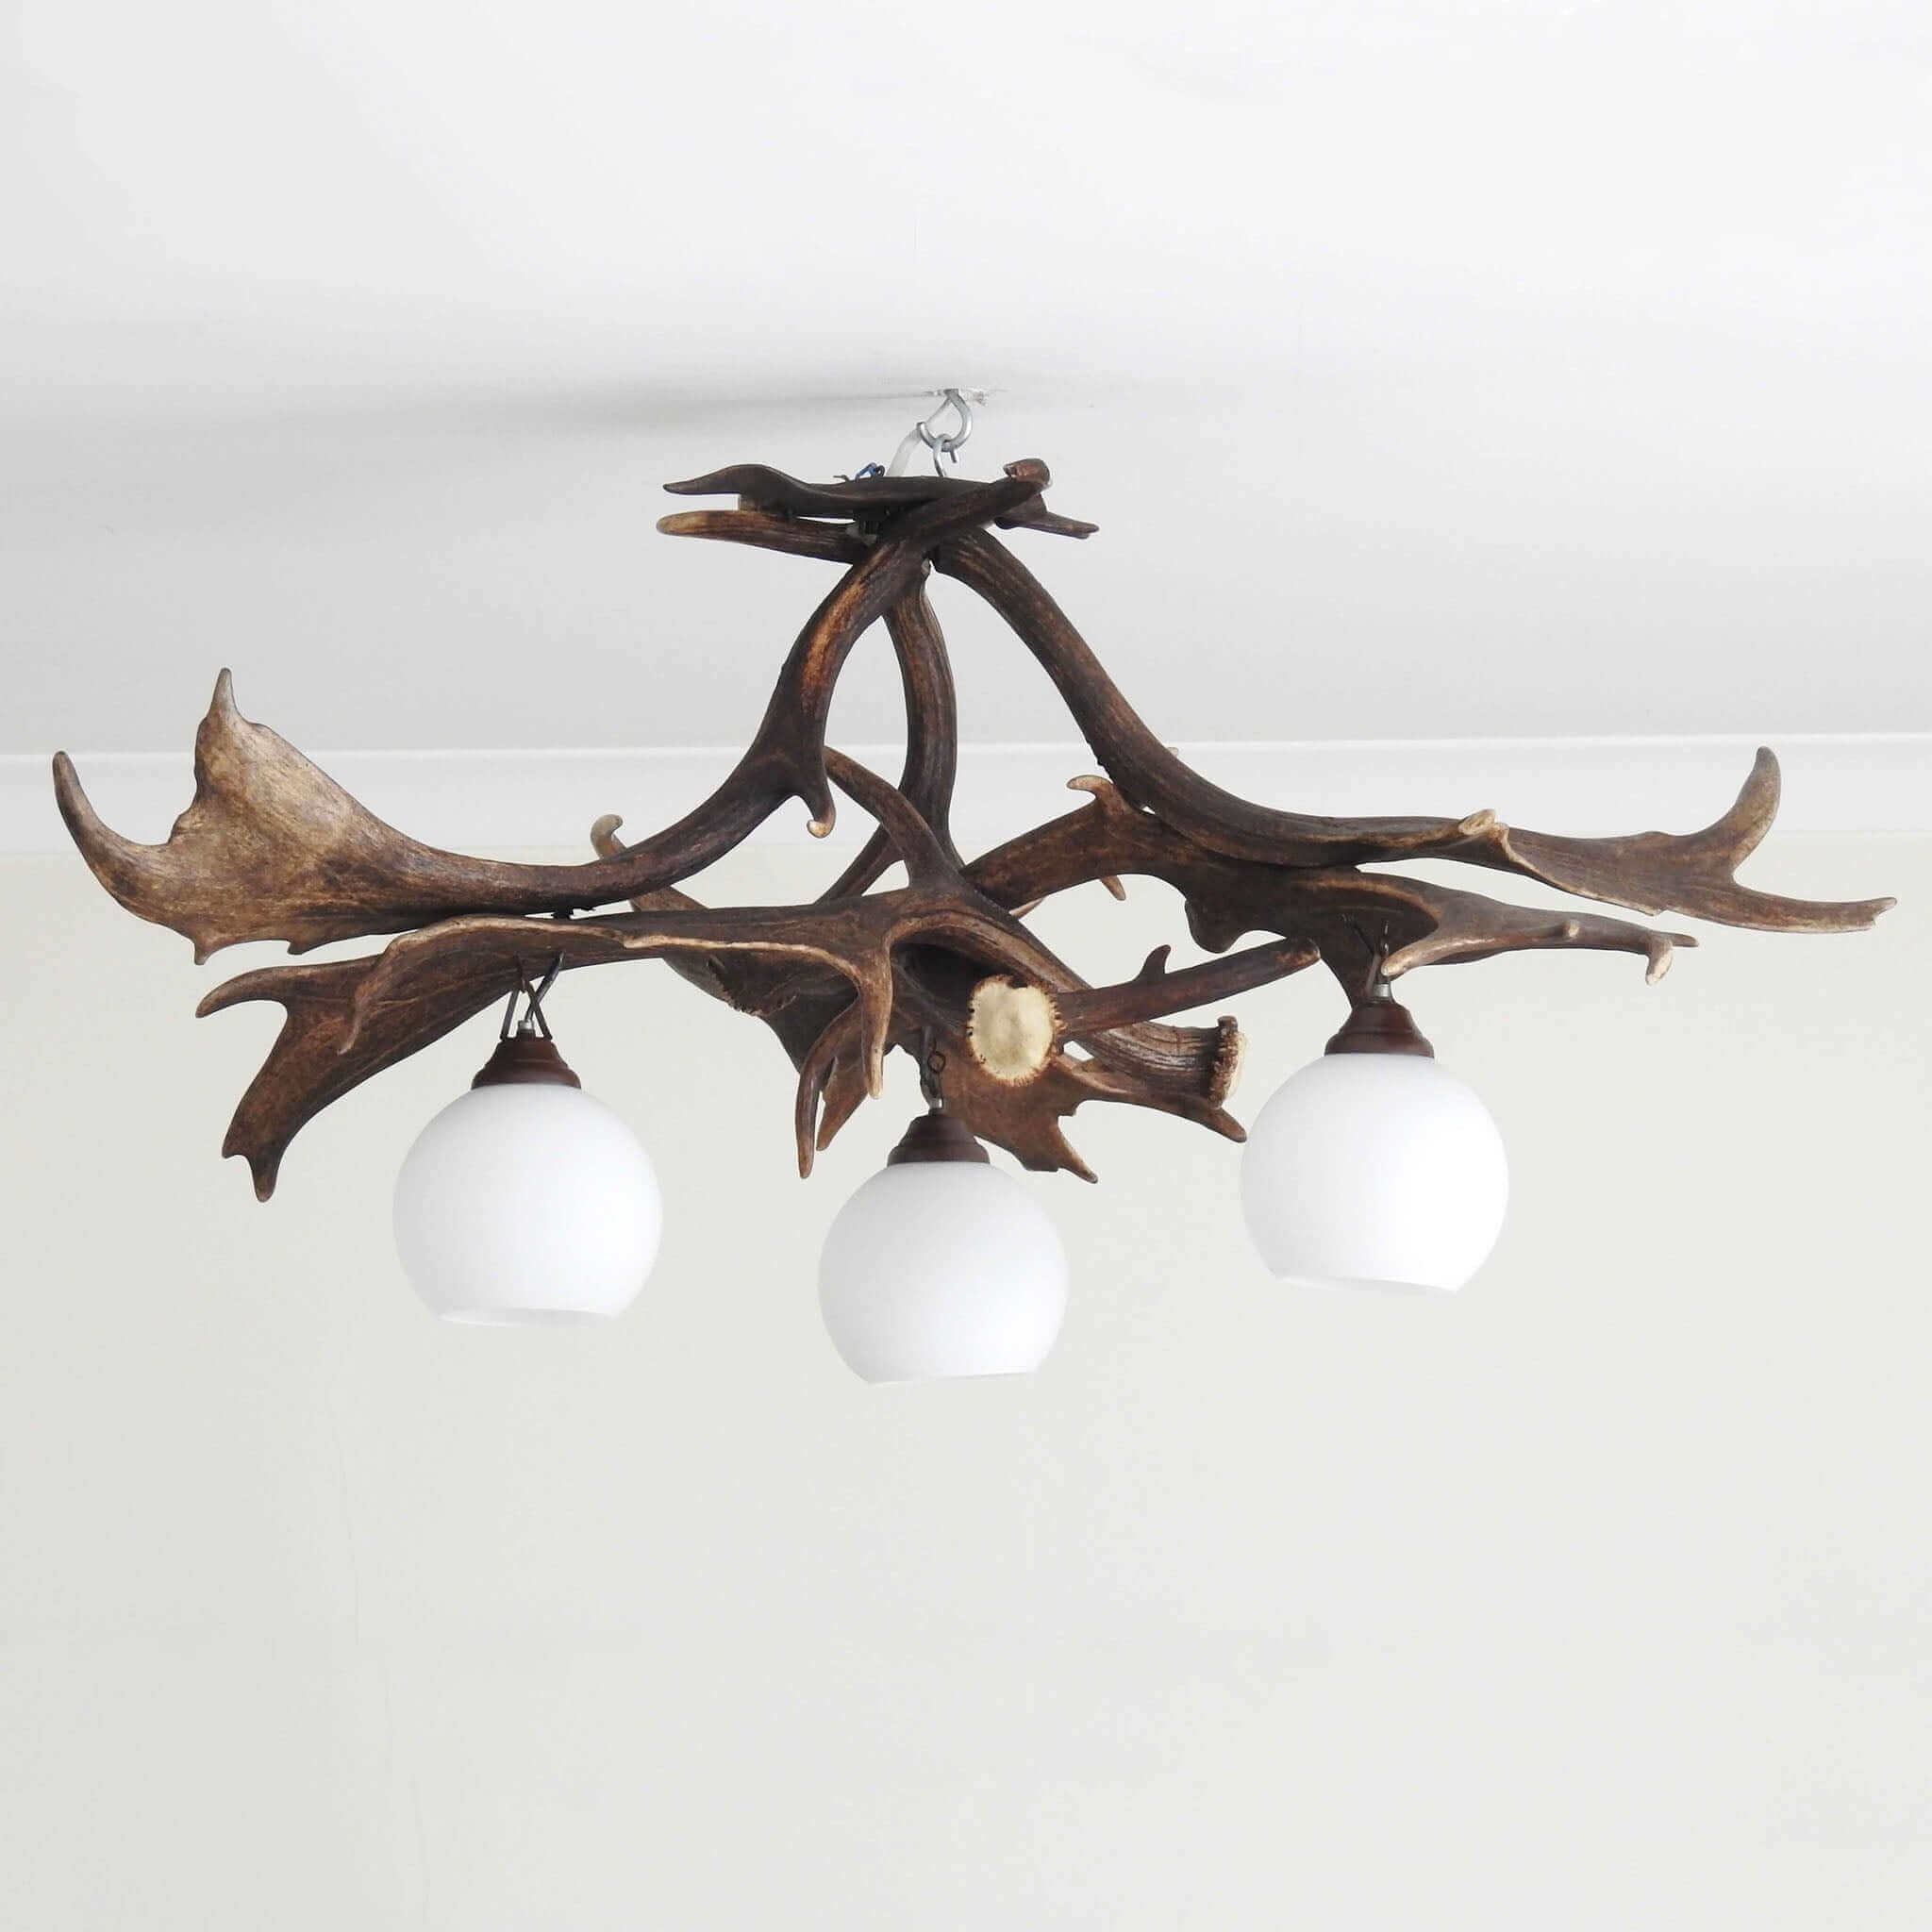 Rustic style antler chandelier made of real fallow deer antlers.